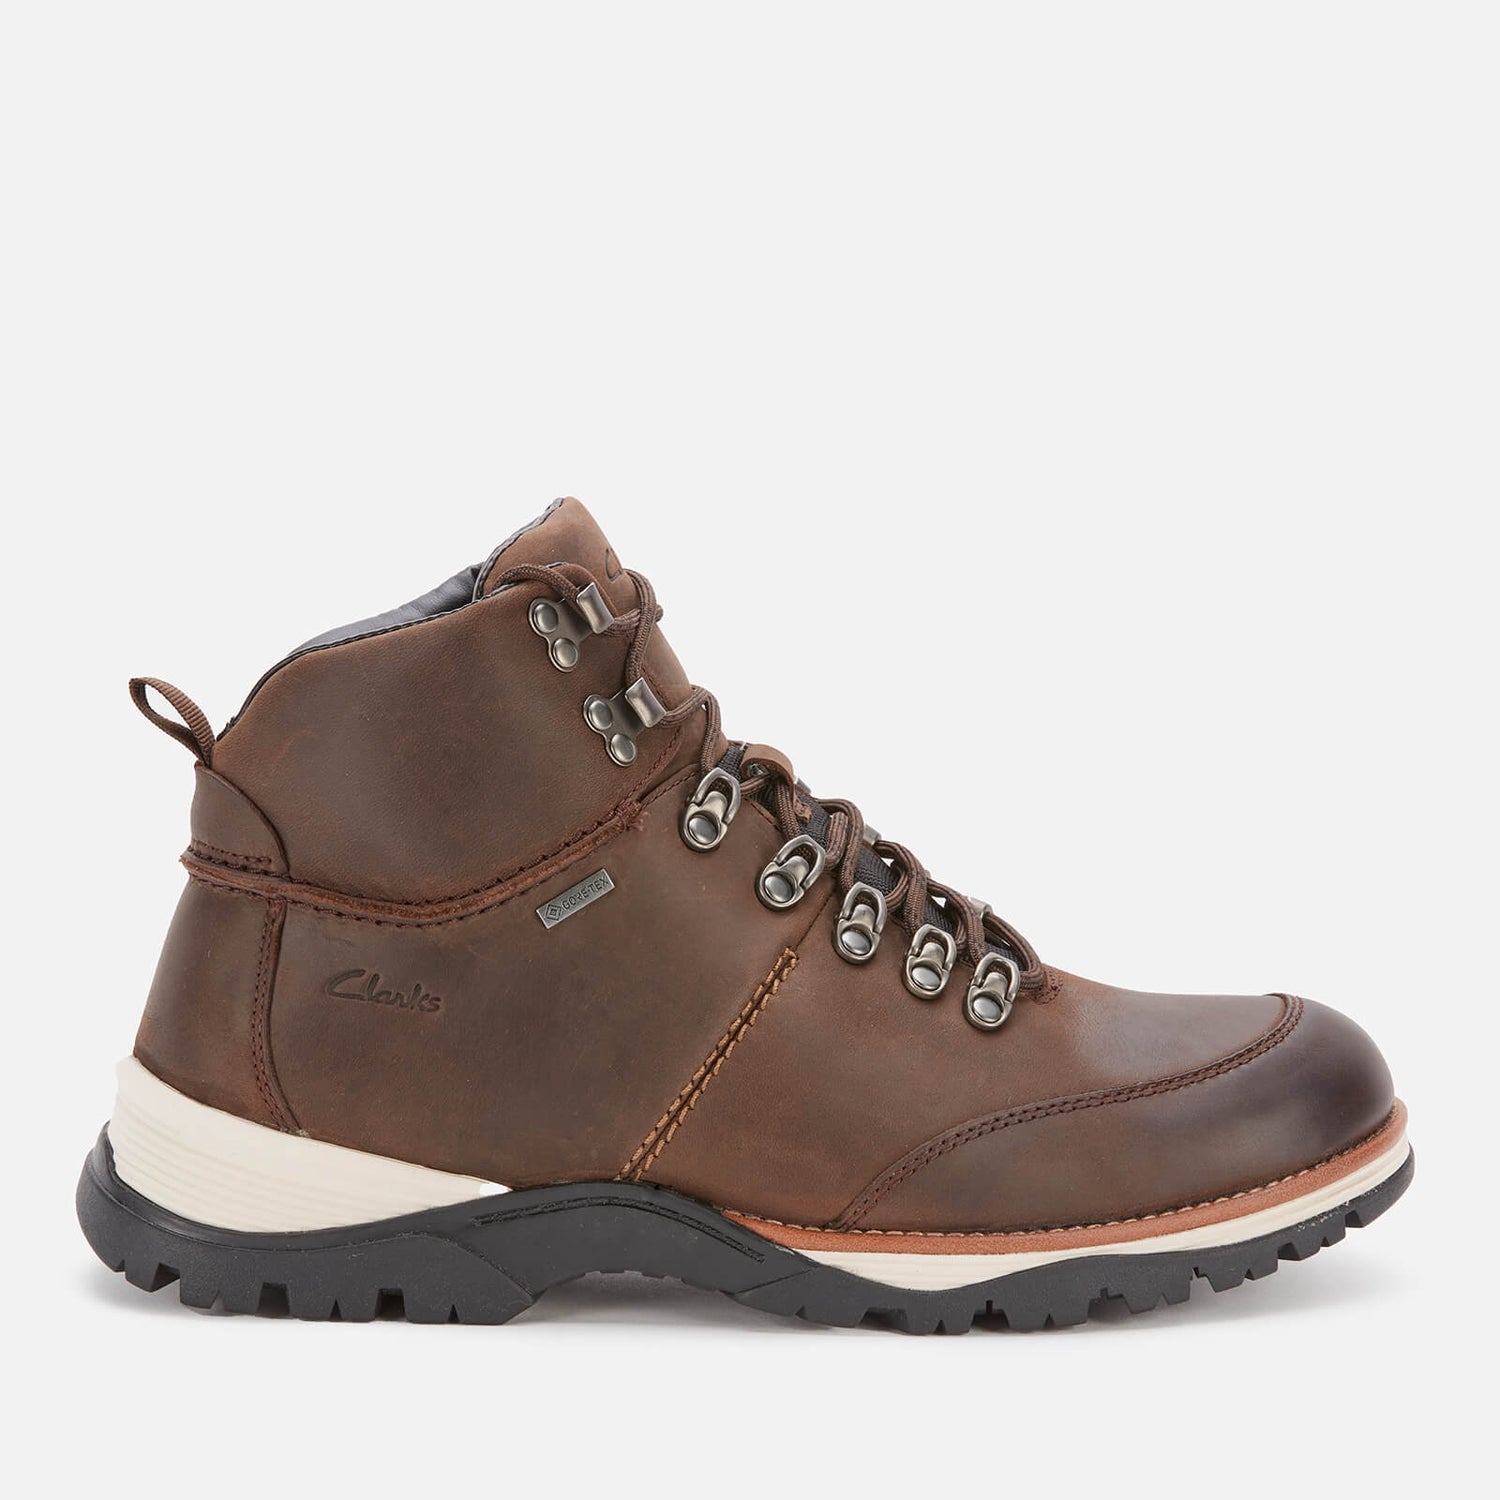 Clarks Men's Topton Pine Goretex Hiking Style Boots - Dark Brown - UK 7